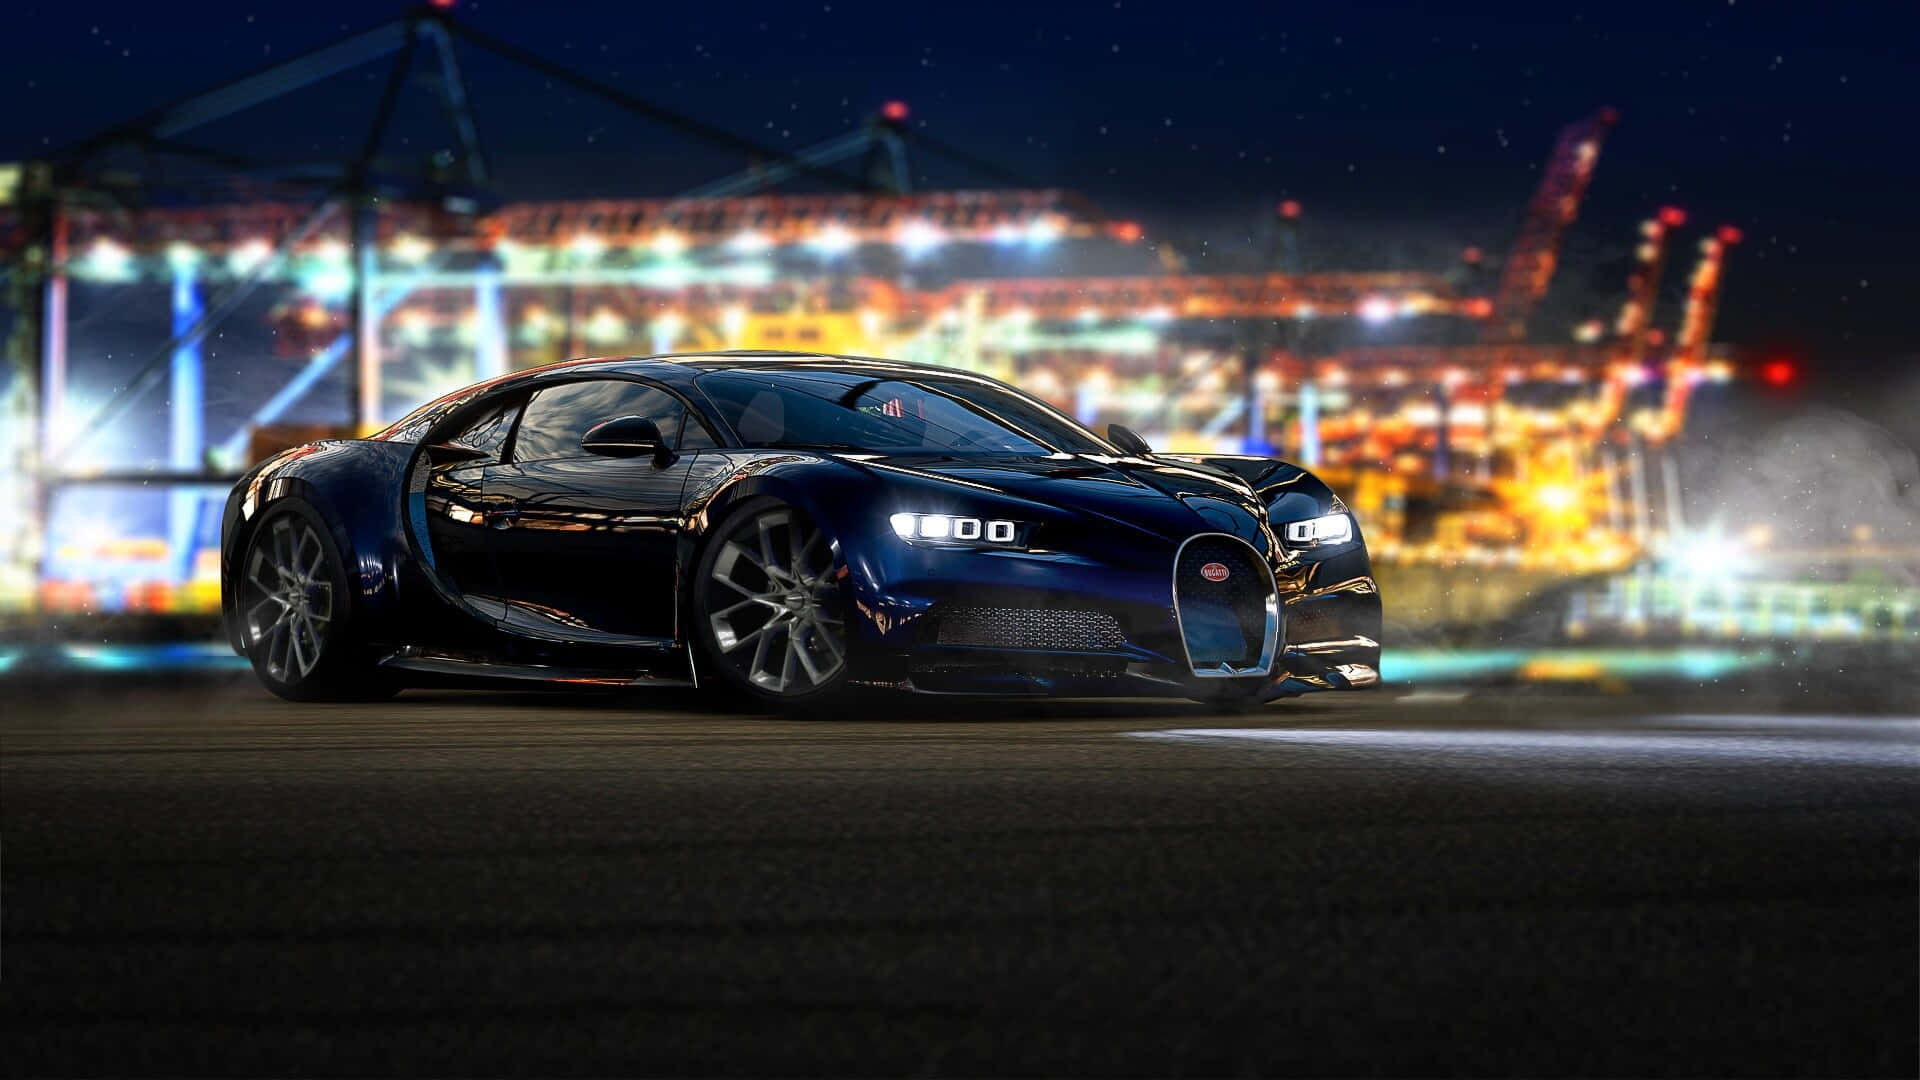 Luxury Sports Car Nighttime Cityscape Wallpaper